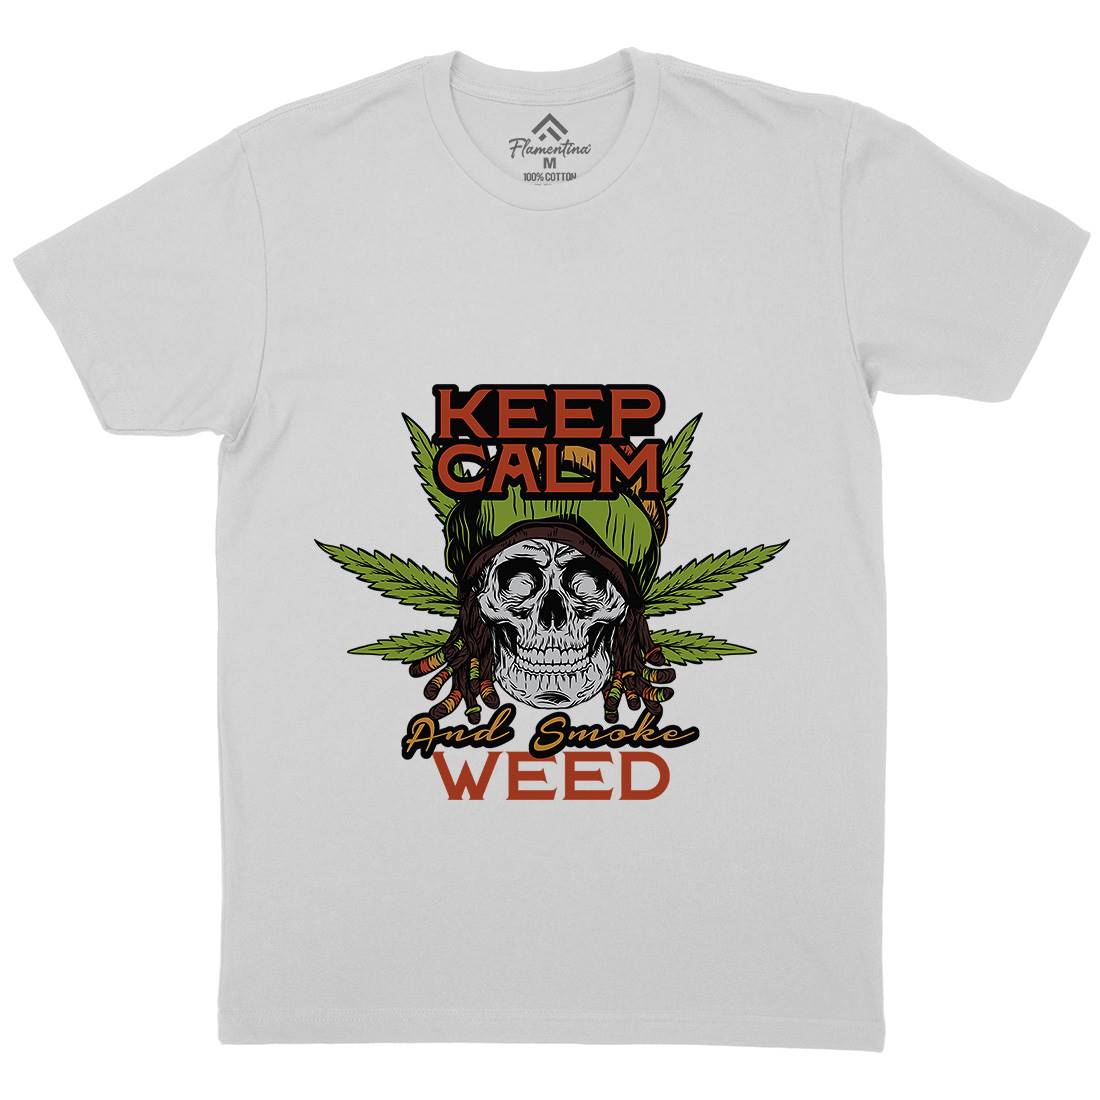 Keep Calm Mens Crew Neck T-Shirt Drugs D951